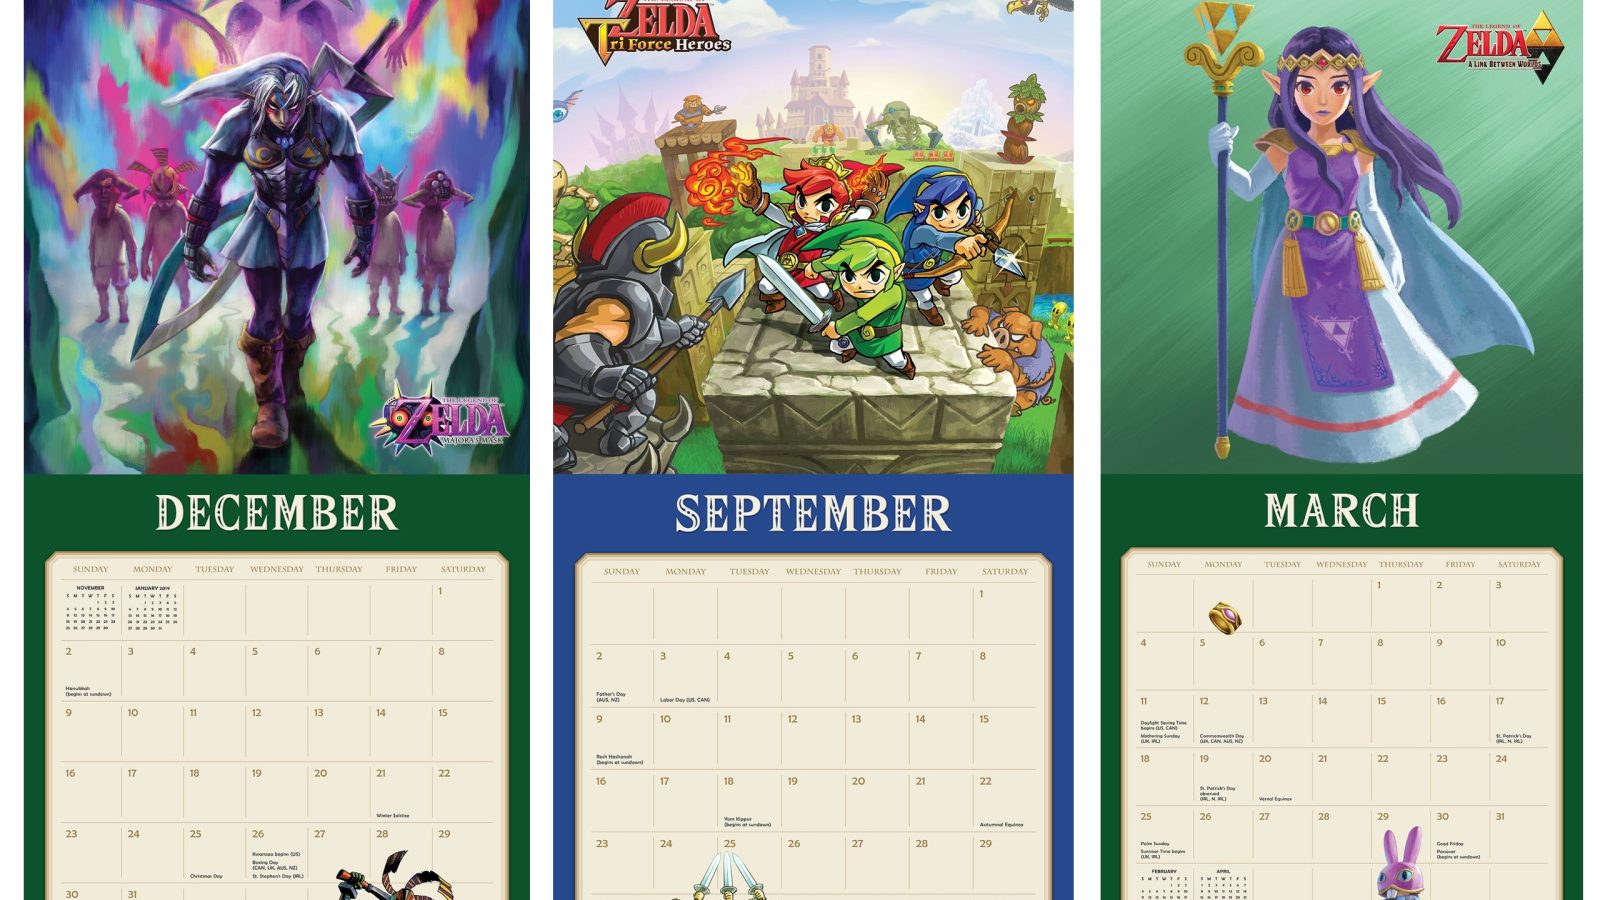 Nintendo's Legend of Zelda 2018 wall calendar drops to 7 (Reg. 15